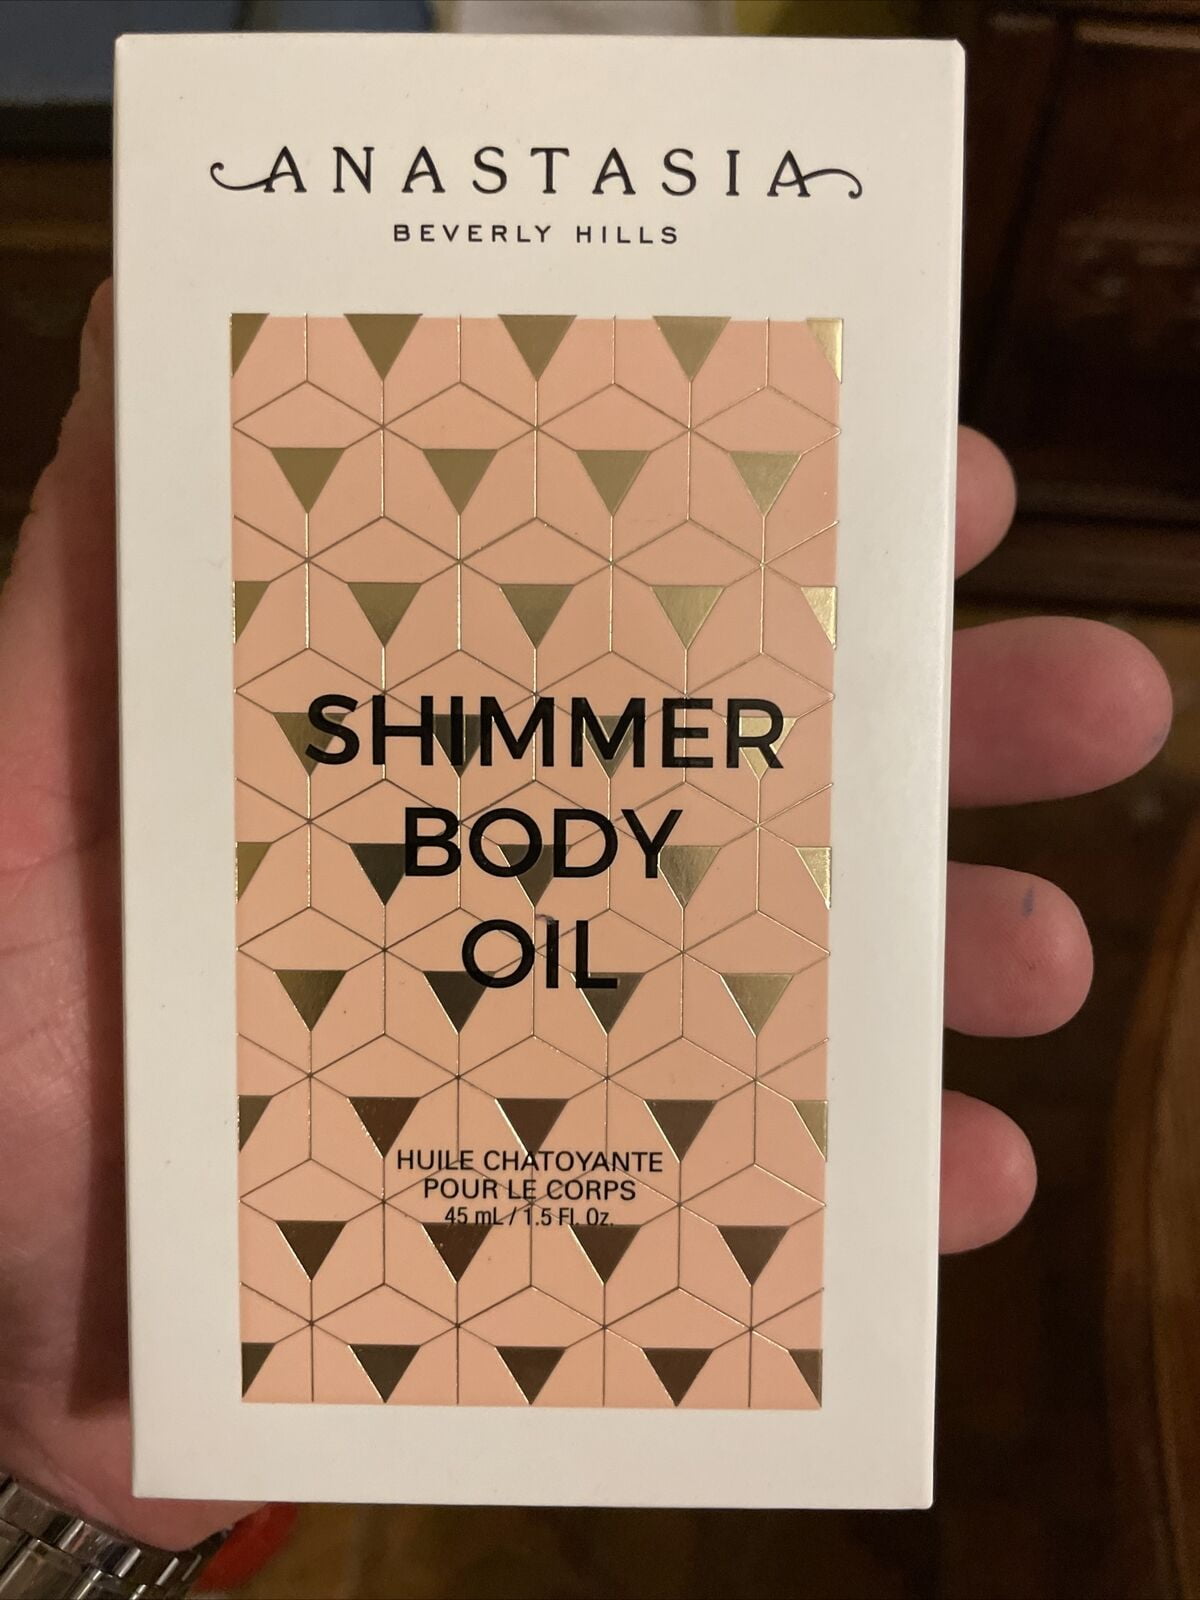 Anastasia Beverly Hills Shimmer Body Oil, 1.5-oz. - Macy's